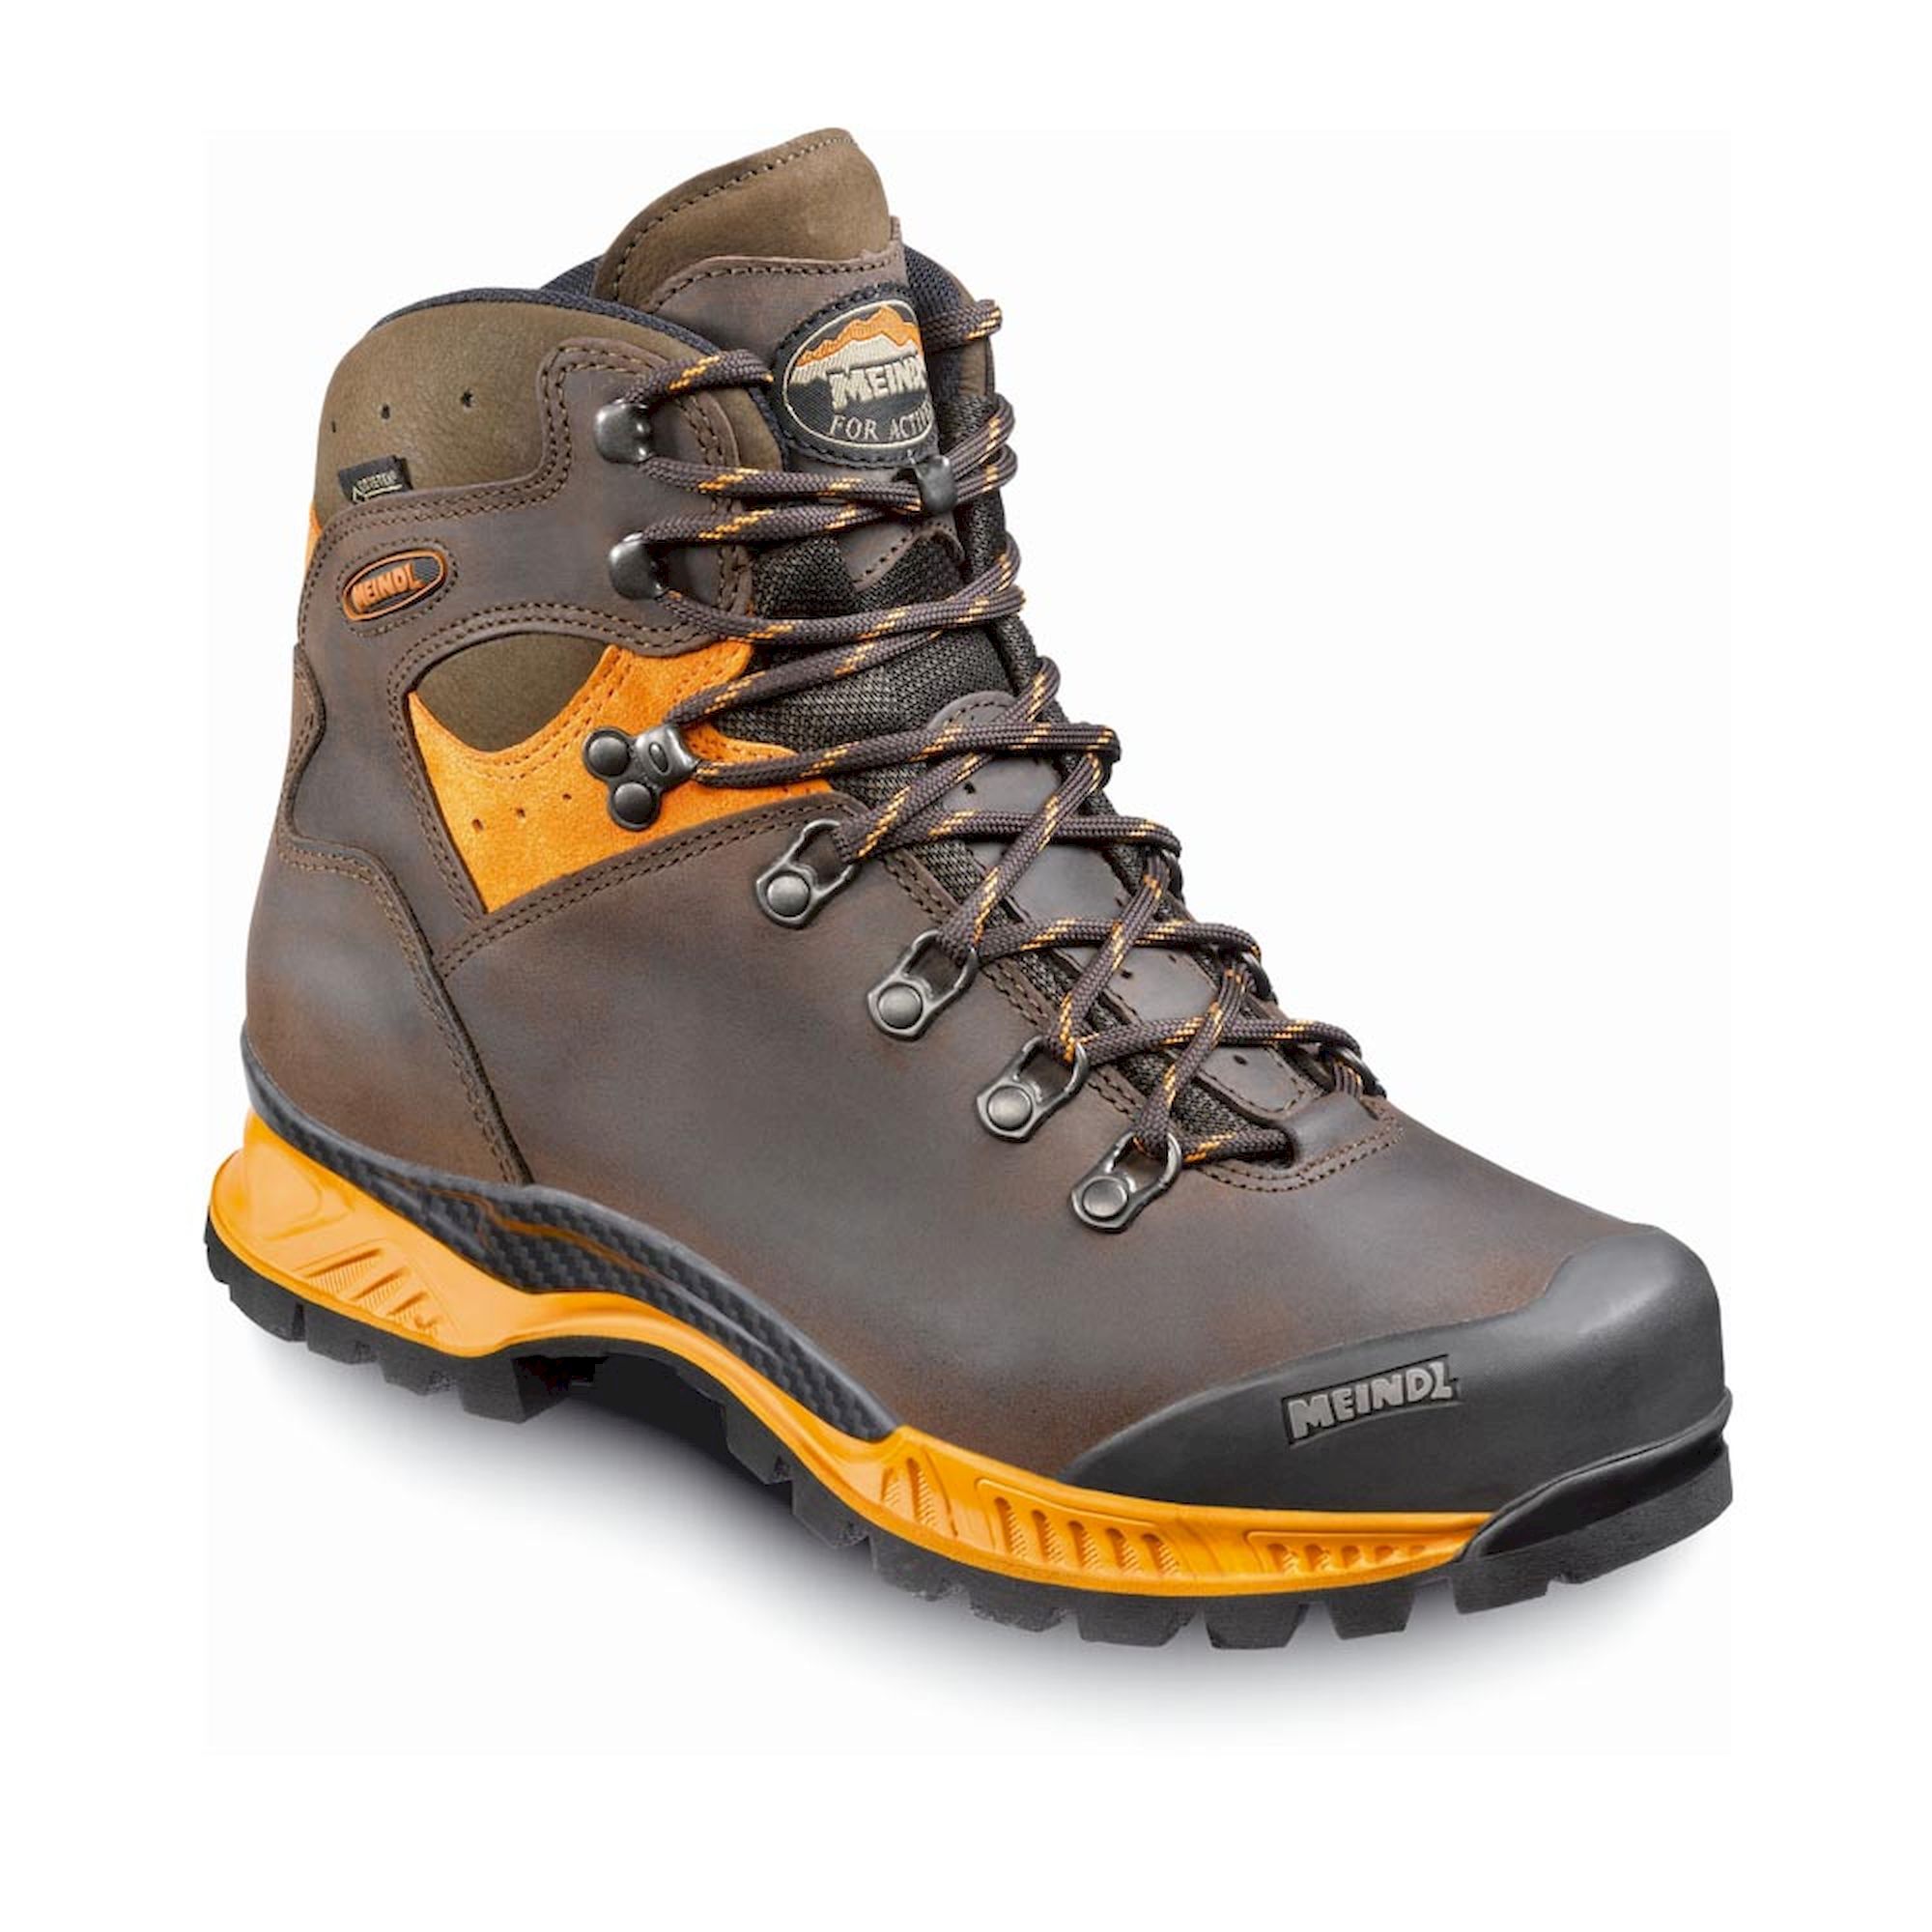 Meindl - Softline TOP GTX® - Hiking Boots - Men's